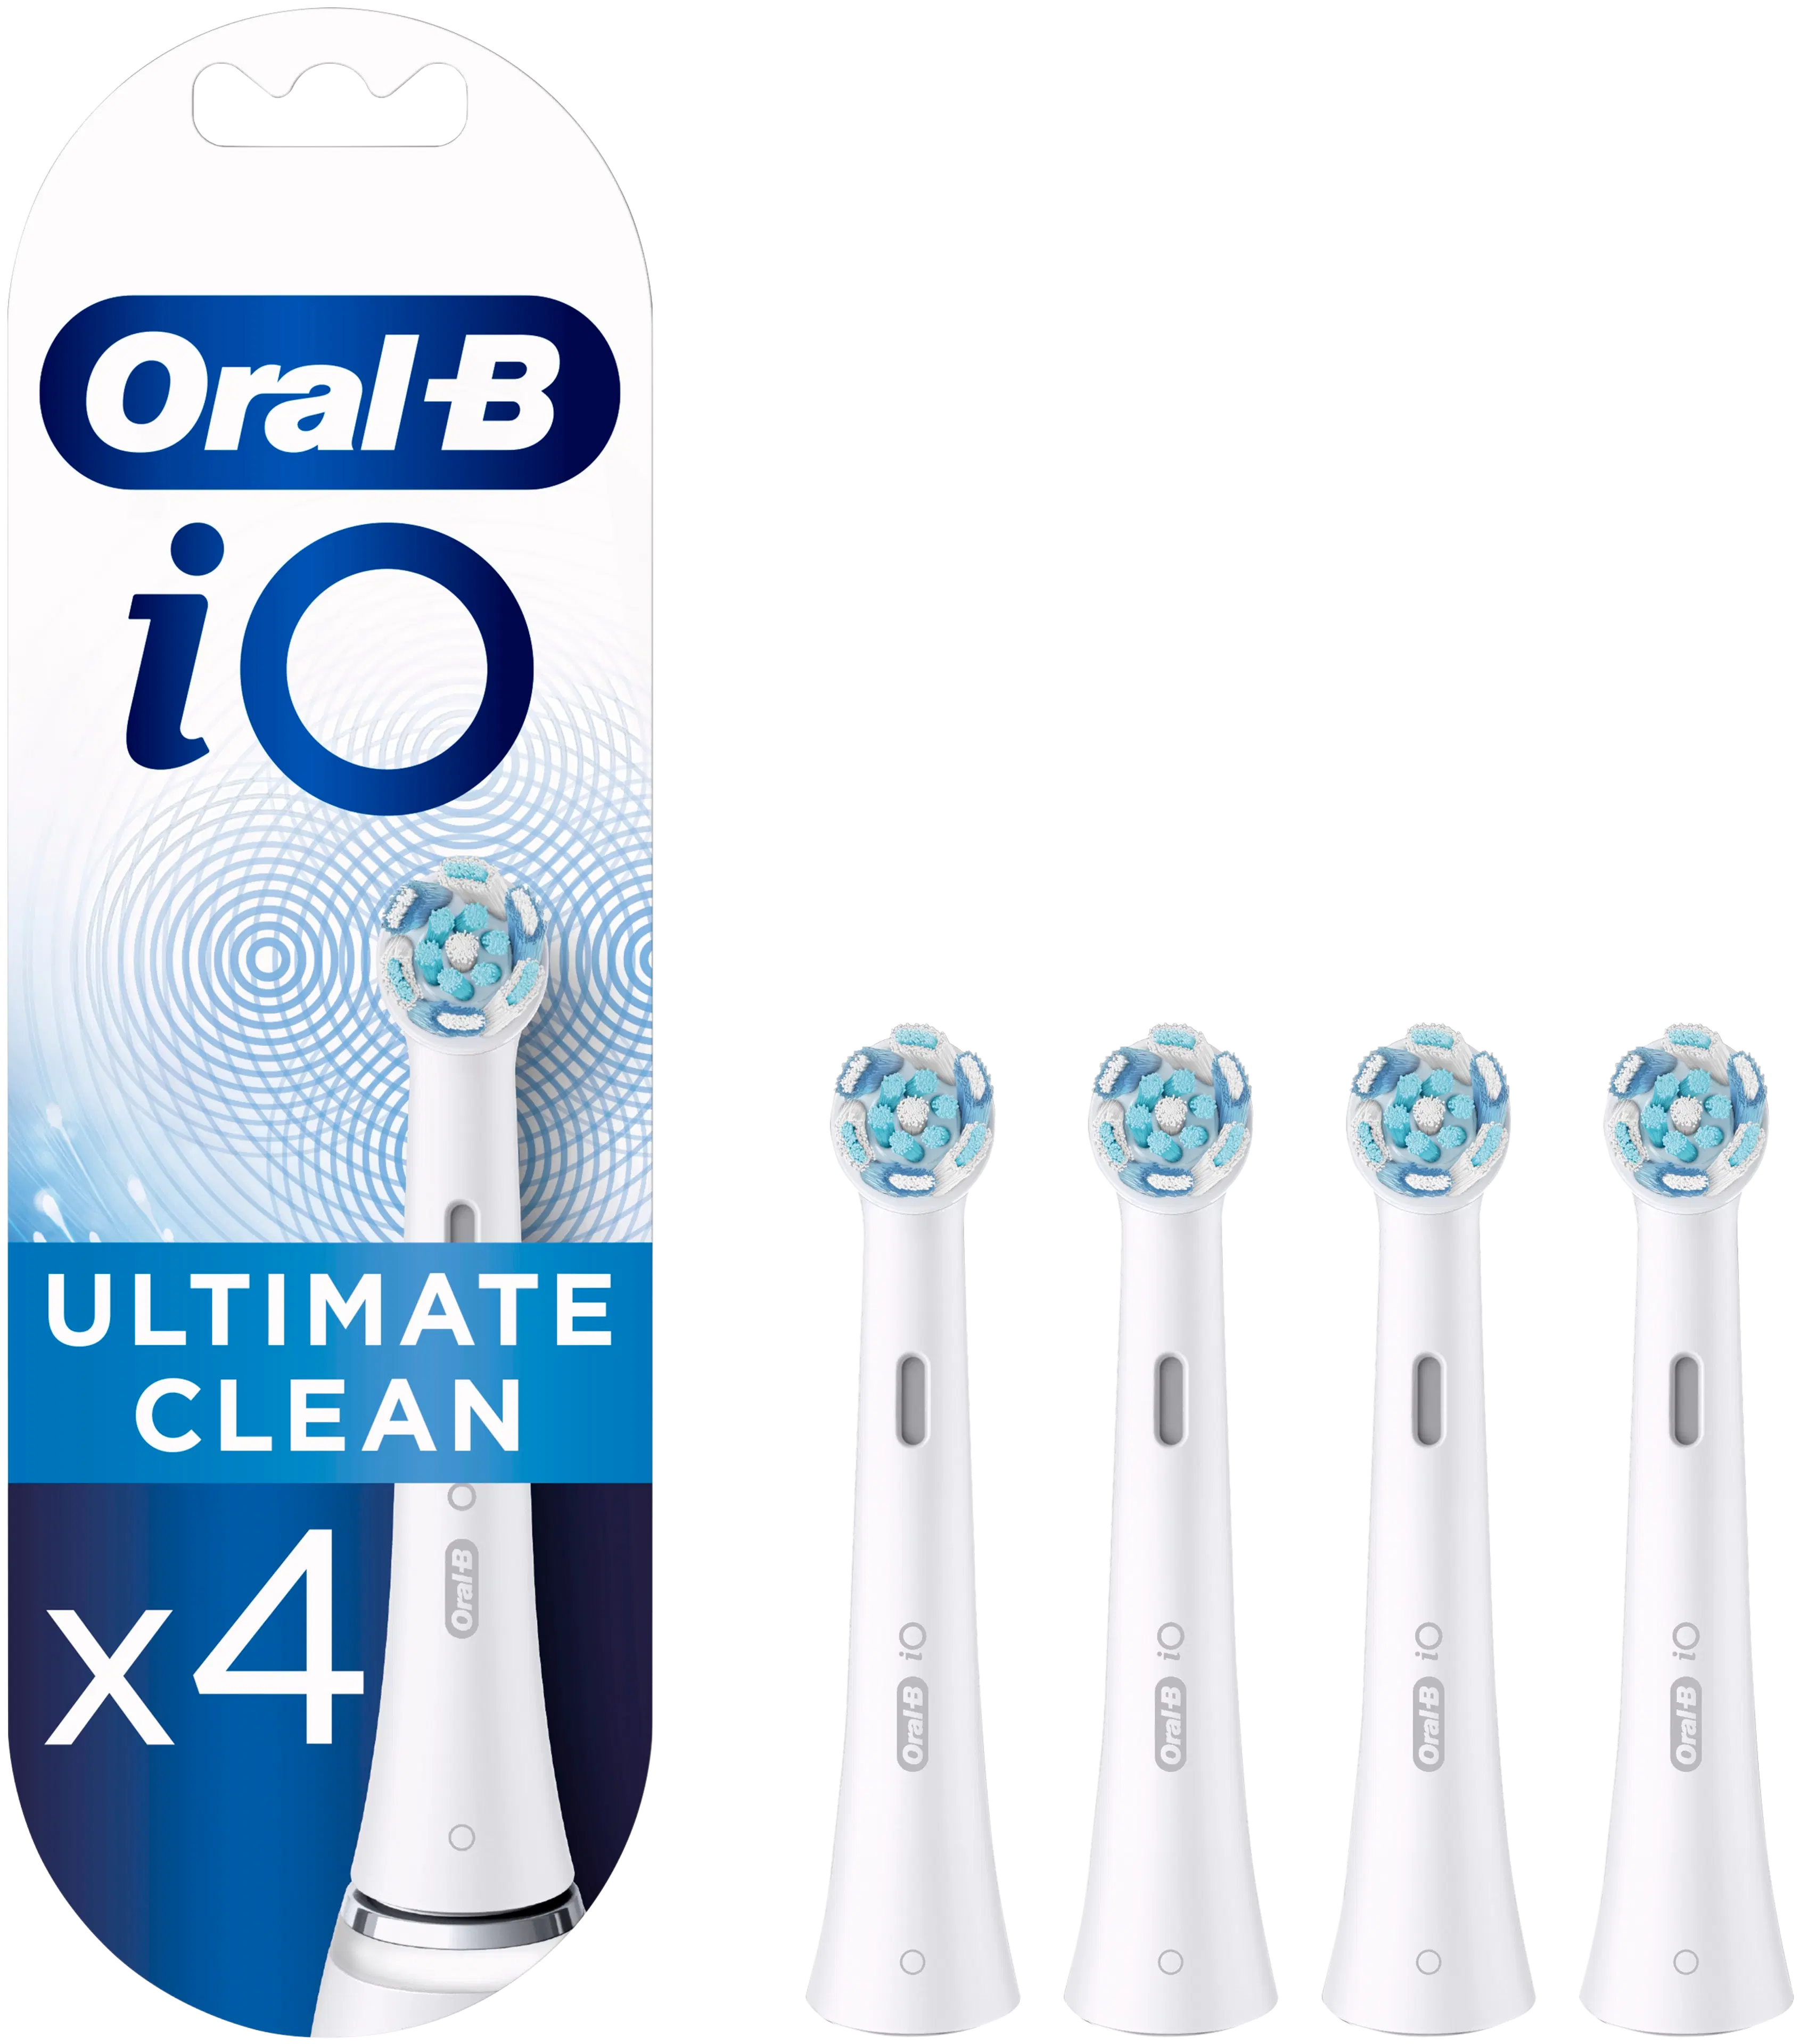 Oral-B iO Ultimate Clean -Vaihtoharjat, 4 Kpl:n Pakkaus